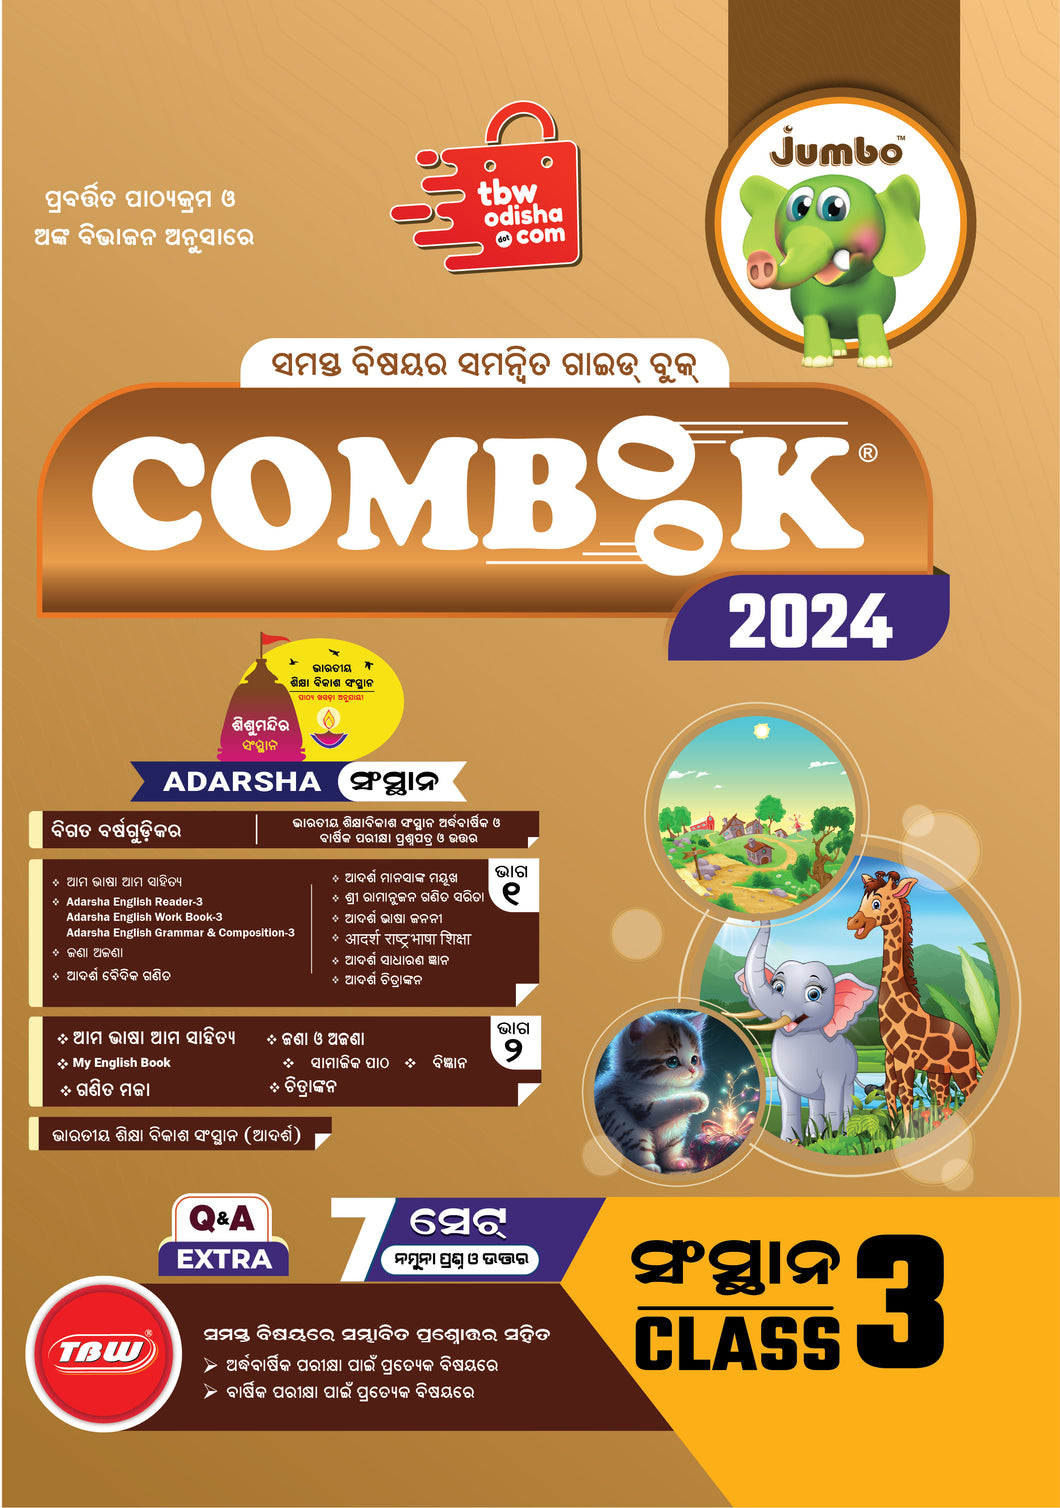 Jumbo Adarsha COMBOOK 2024 Sishu Mandir Sansthan